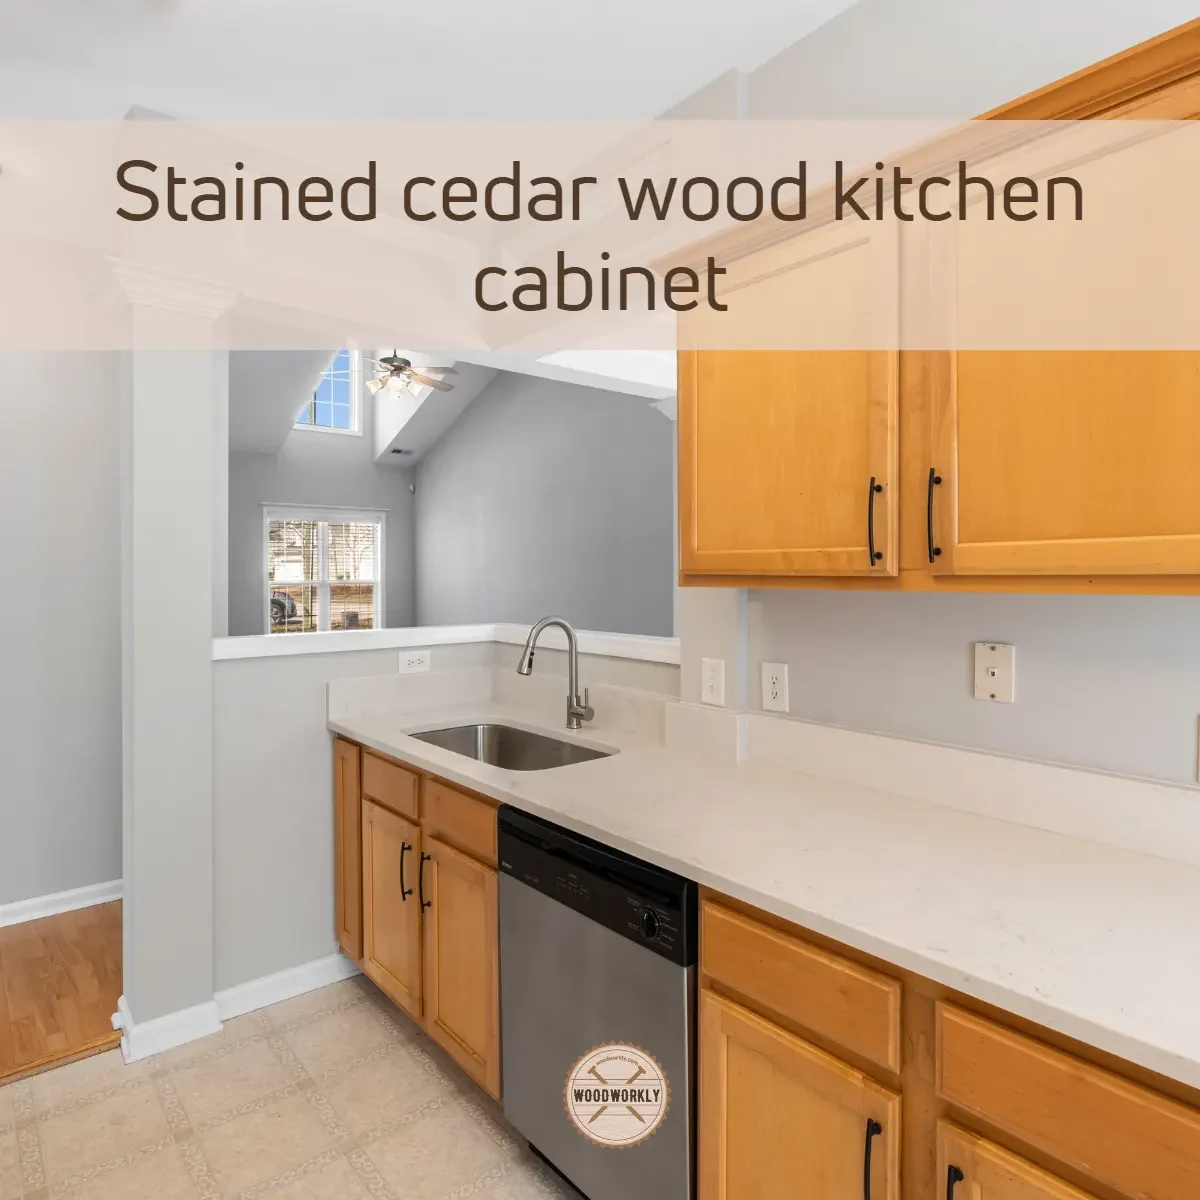 Stained cedar wood kitchen cabinet